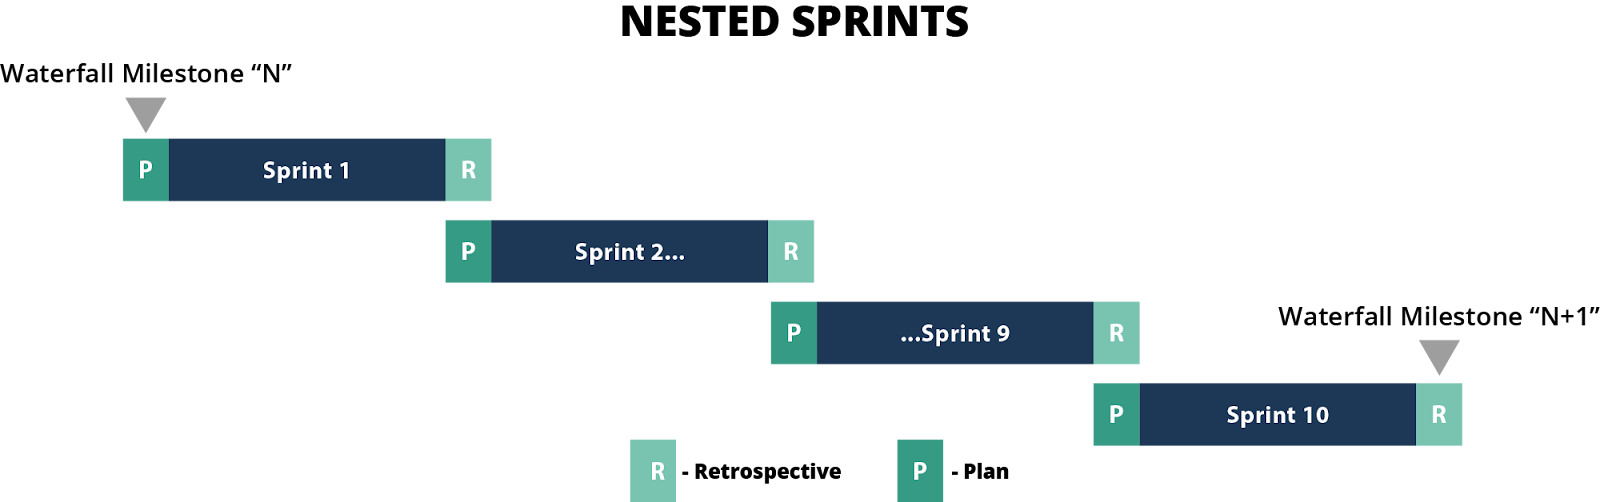 Nested Sprints Diagram 